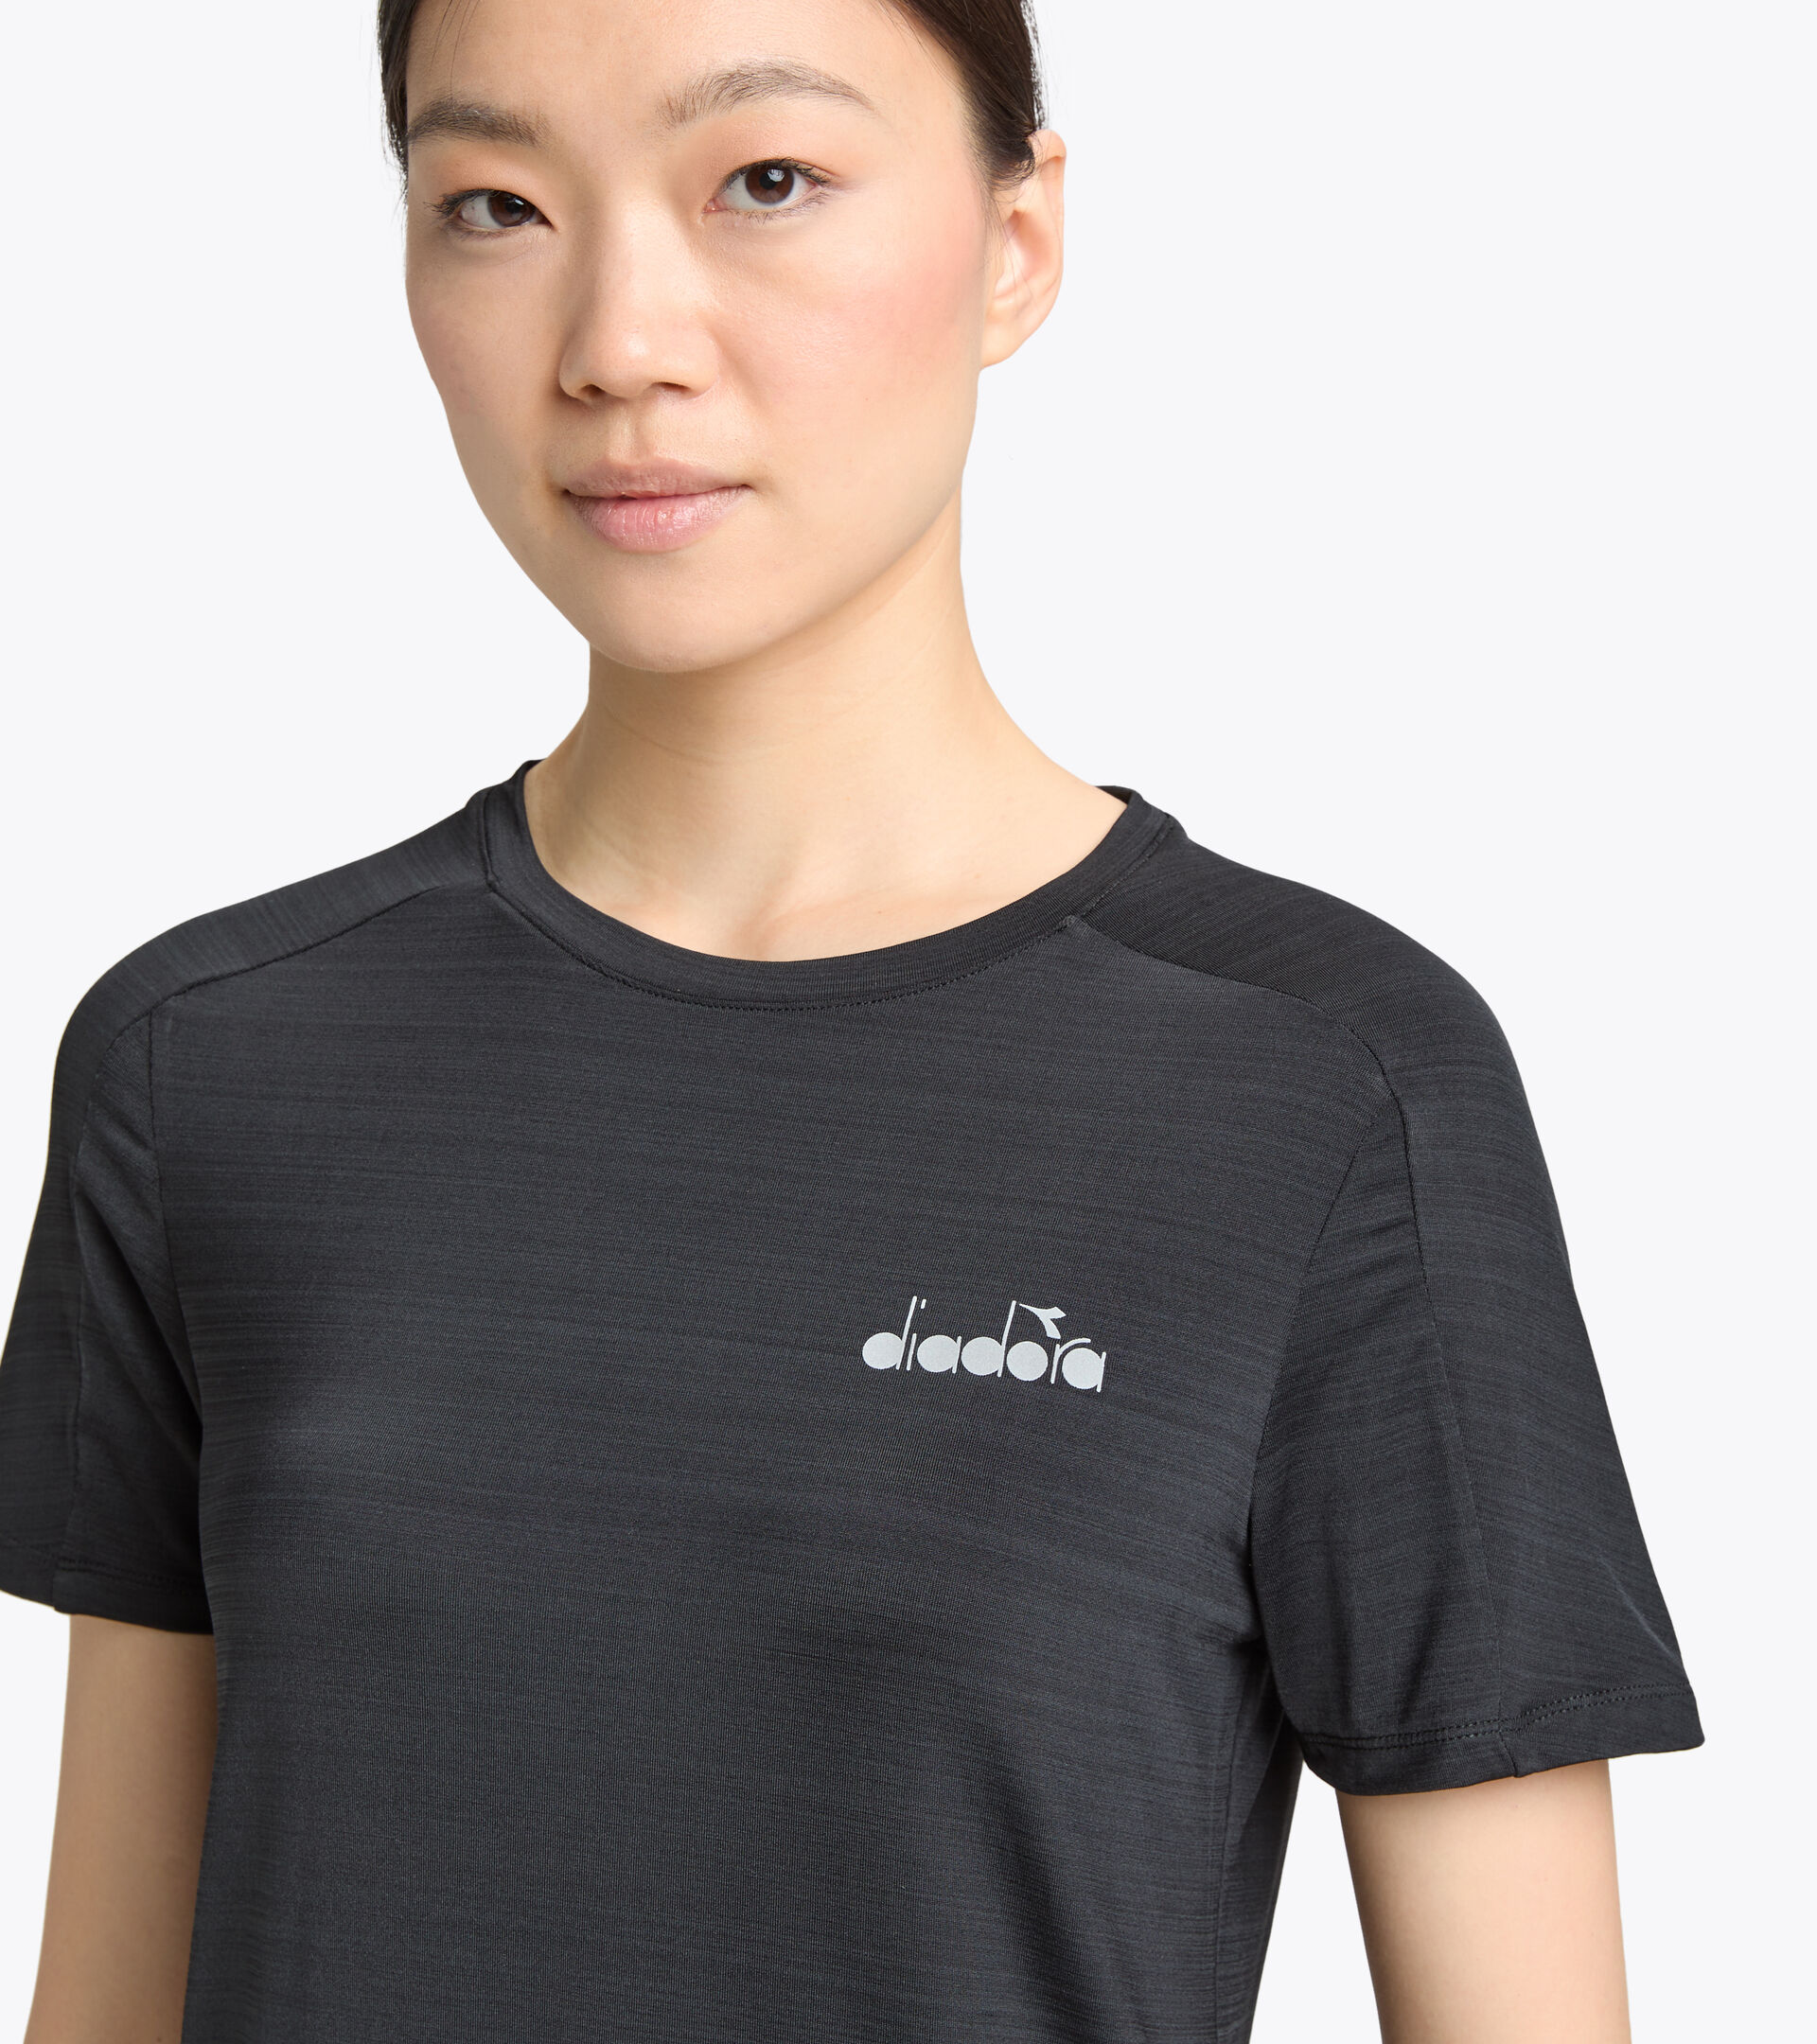 Camiseta para entrenar - Mujer L. SS T-SHIRT BE ONE FT NEGRO - Diadora